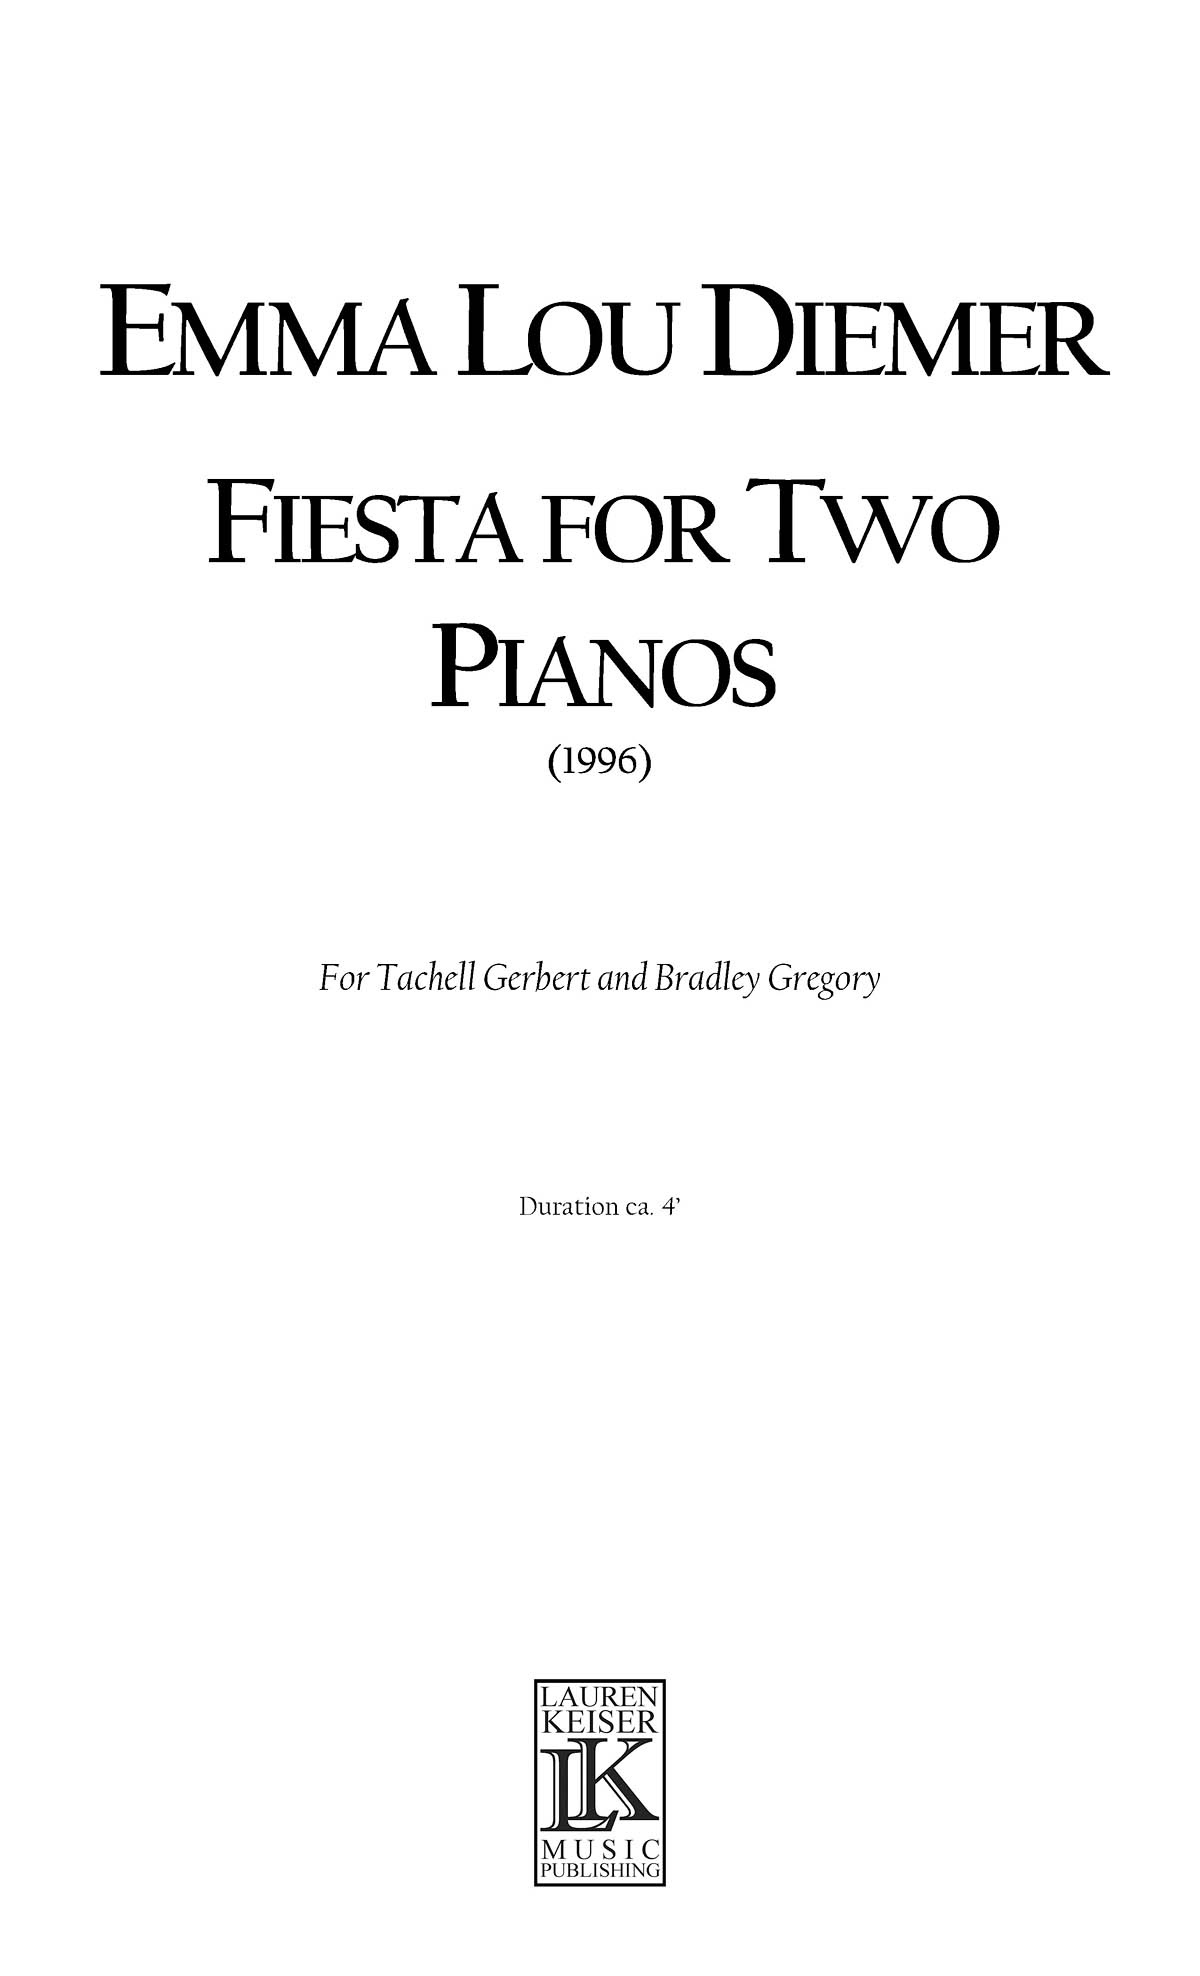 Emma Lou Diemer: Fiesta for Two Pianos: Piano Duet: Instrumental Album